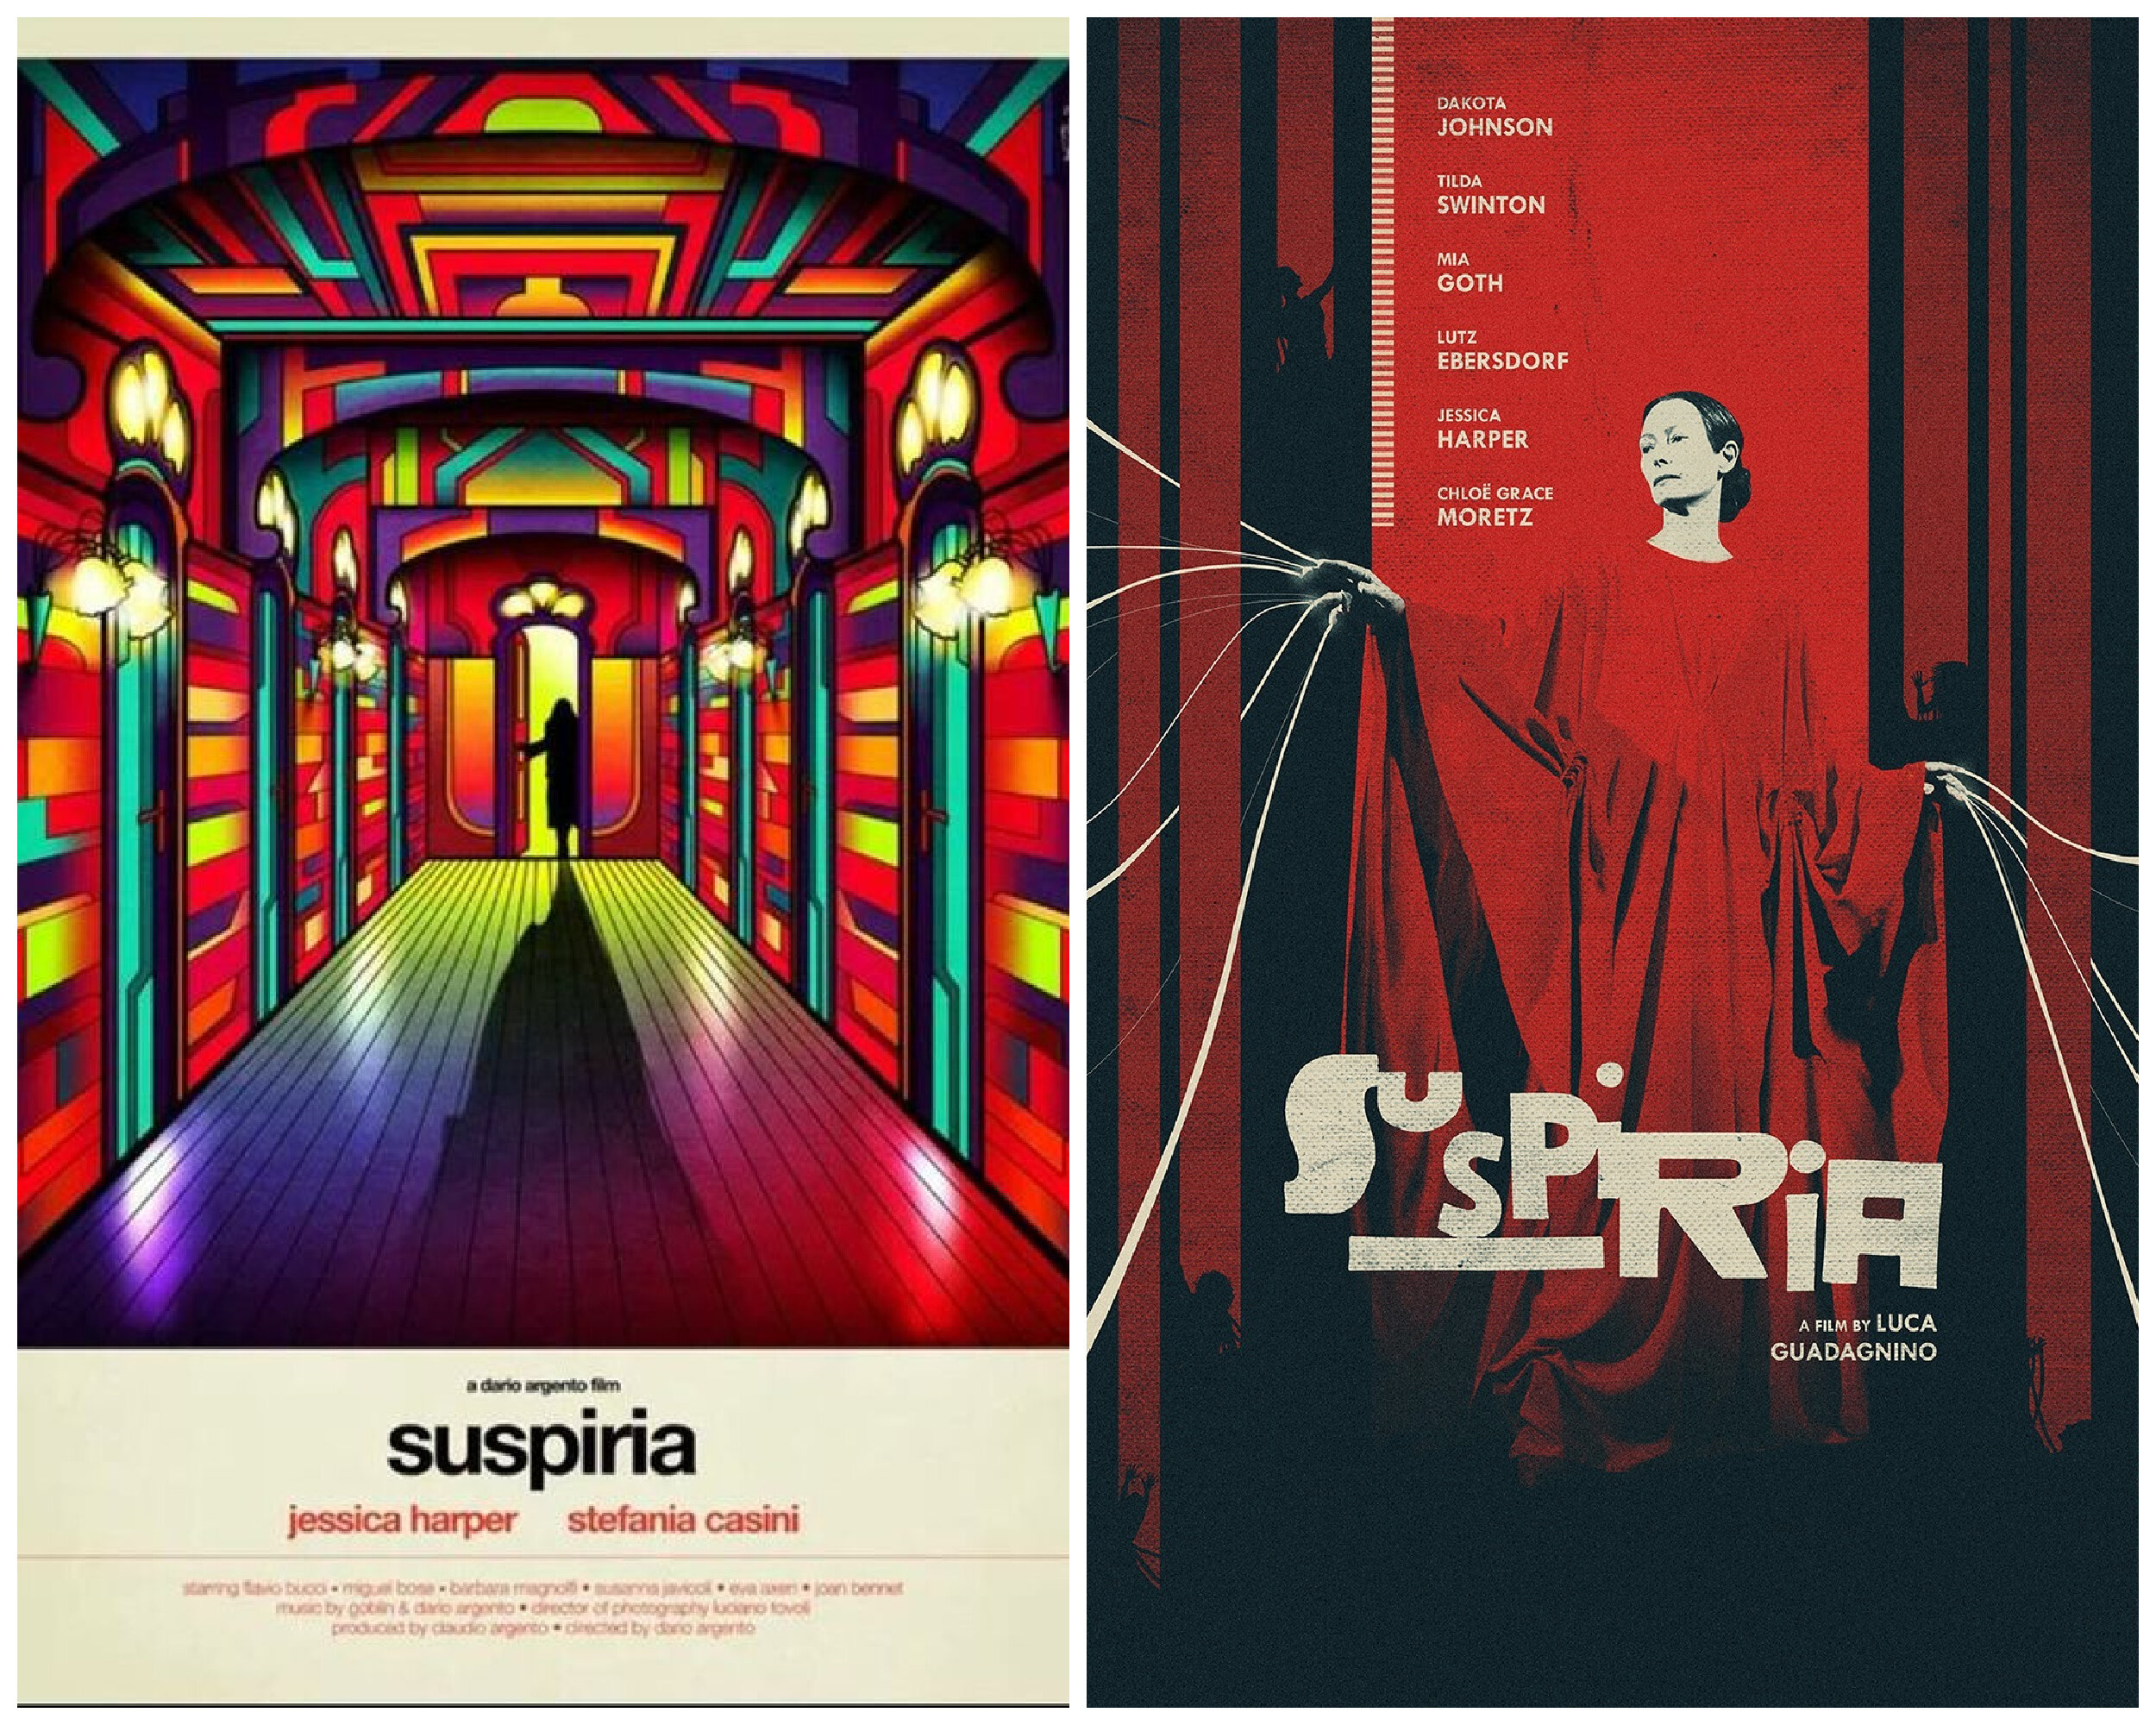 Suspiria 2018 Movie Dakota Johnson Poster Wallpapers